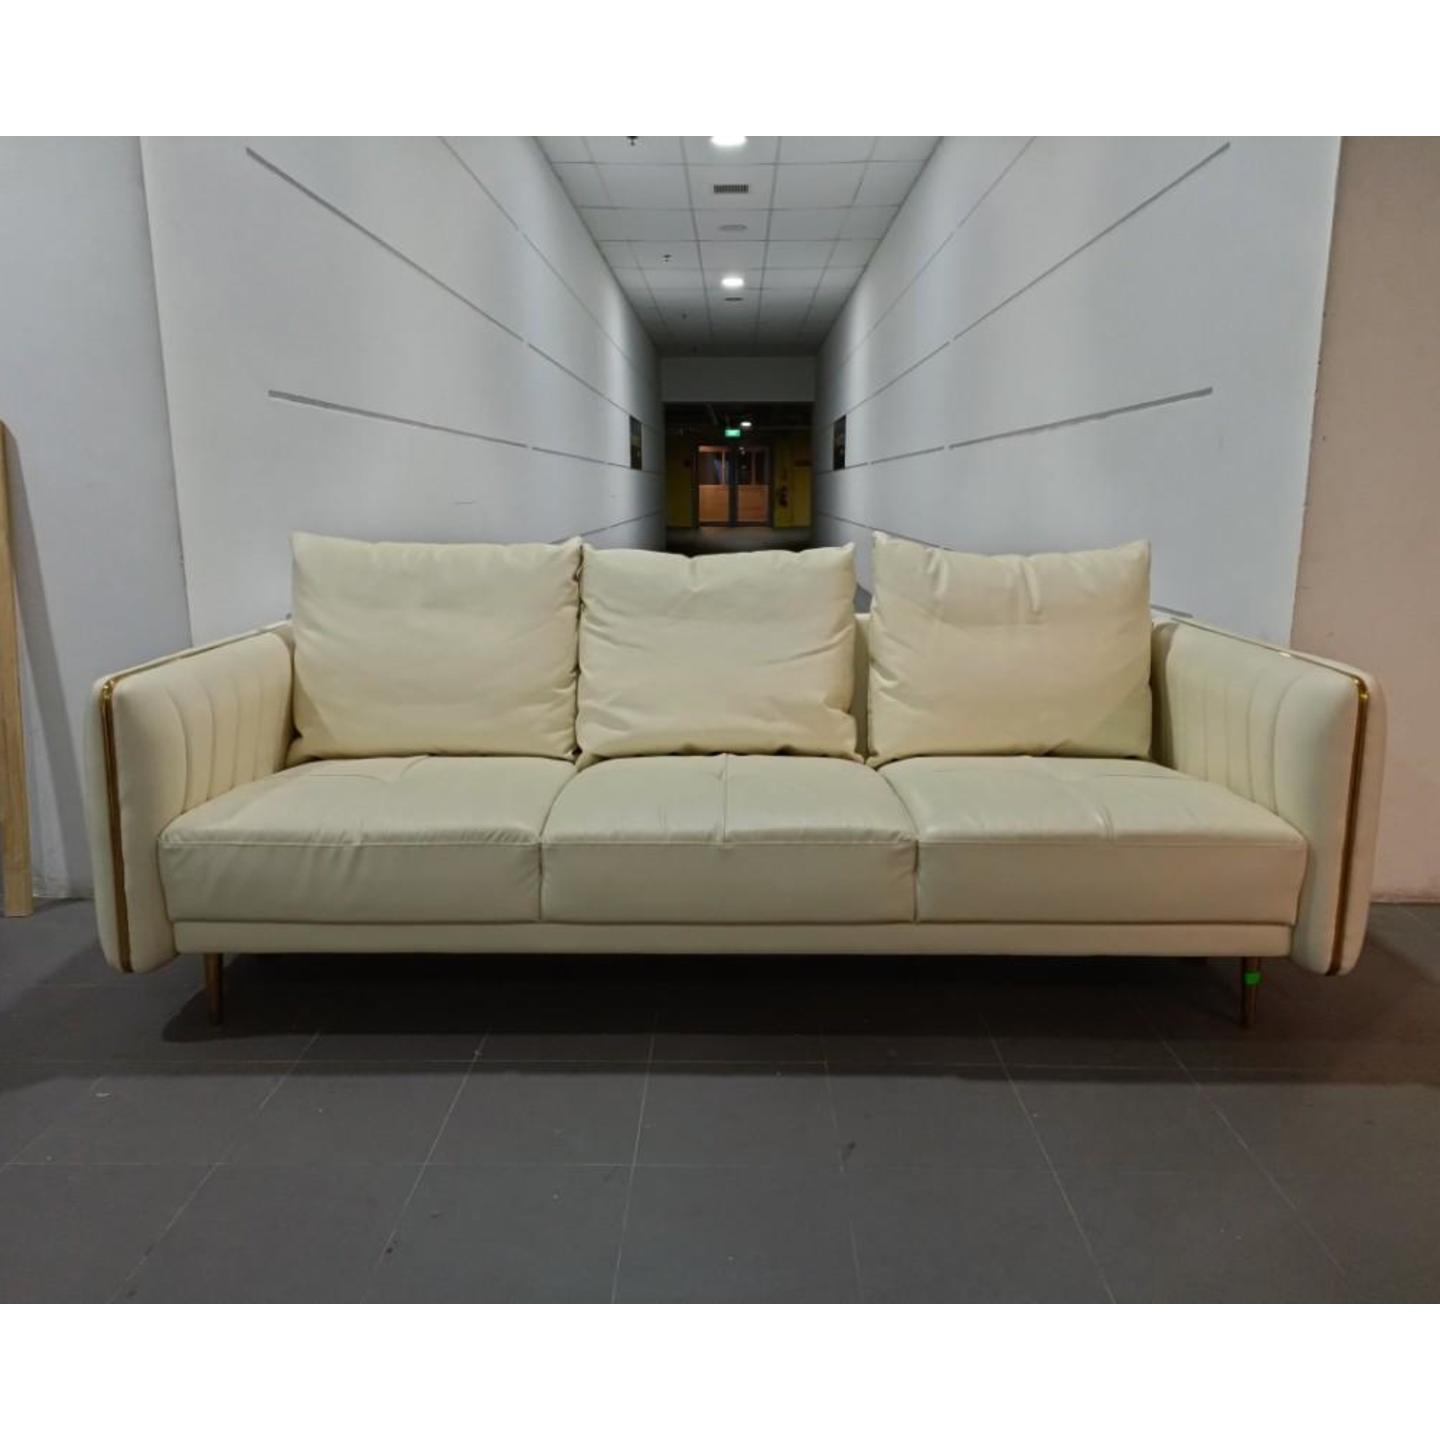 BENELLI 3 Seater Genuine Sofa in LIGHT CREAM